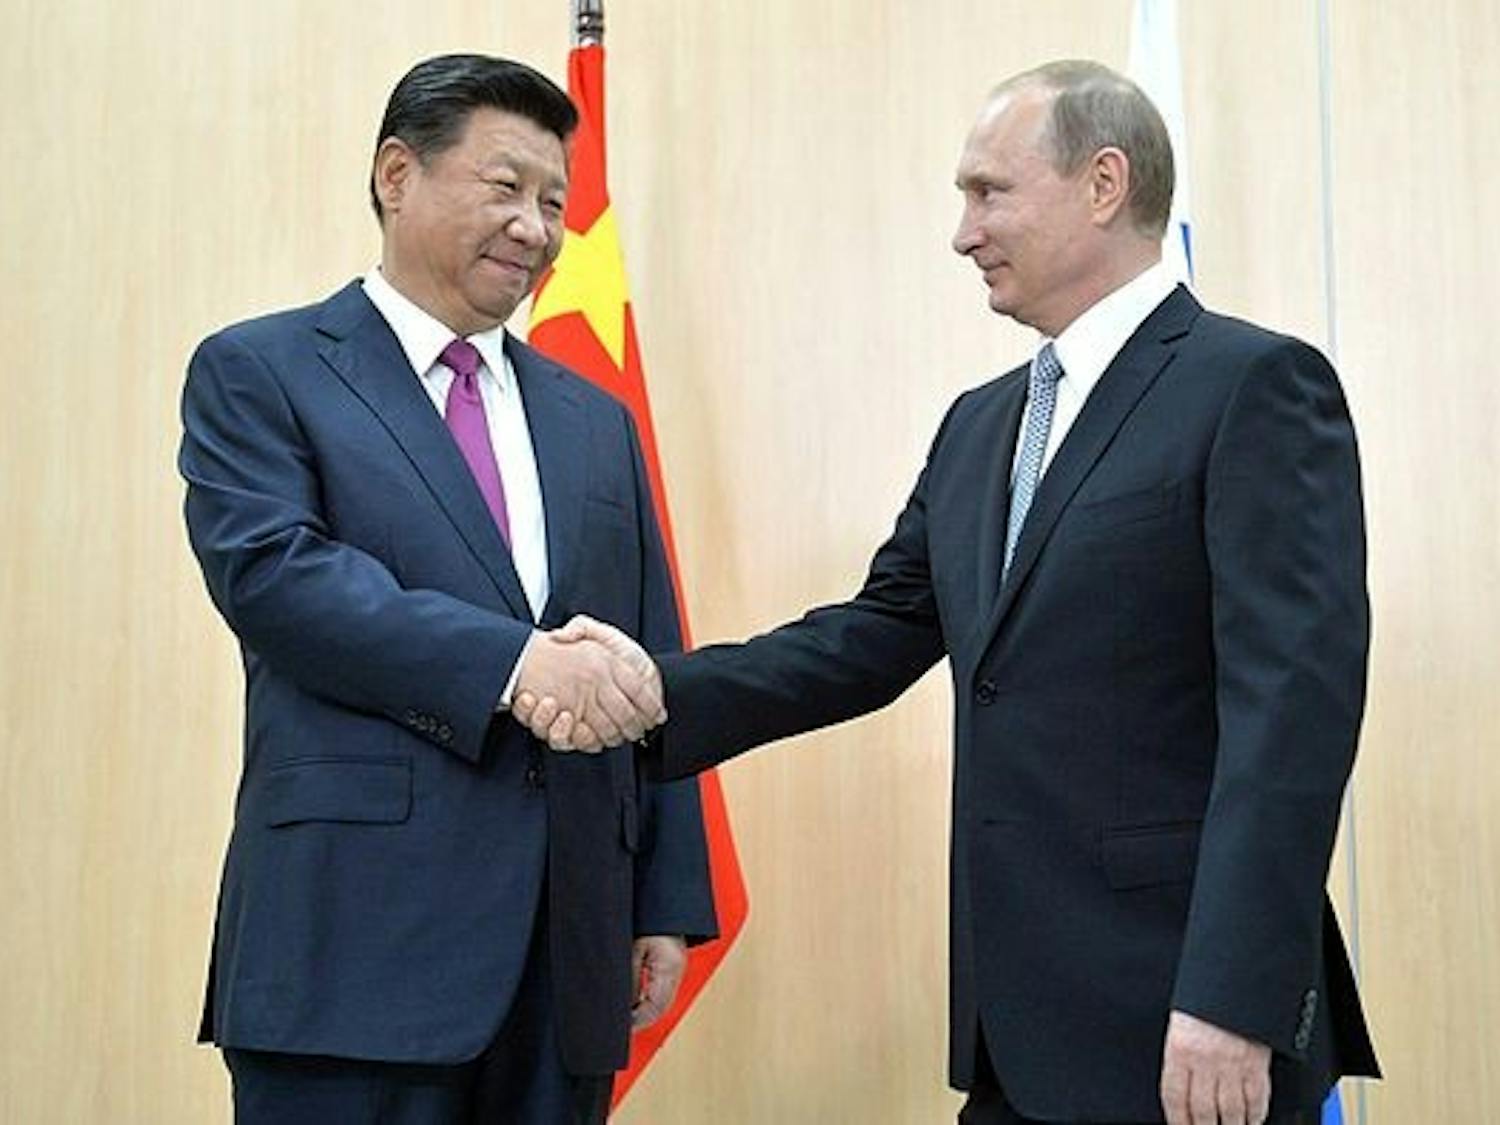 Vladimir_Putin_and_Xi_Jinping,_BRICS_summit_2015_01.jpg